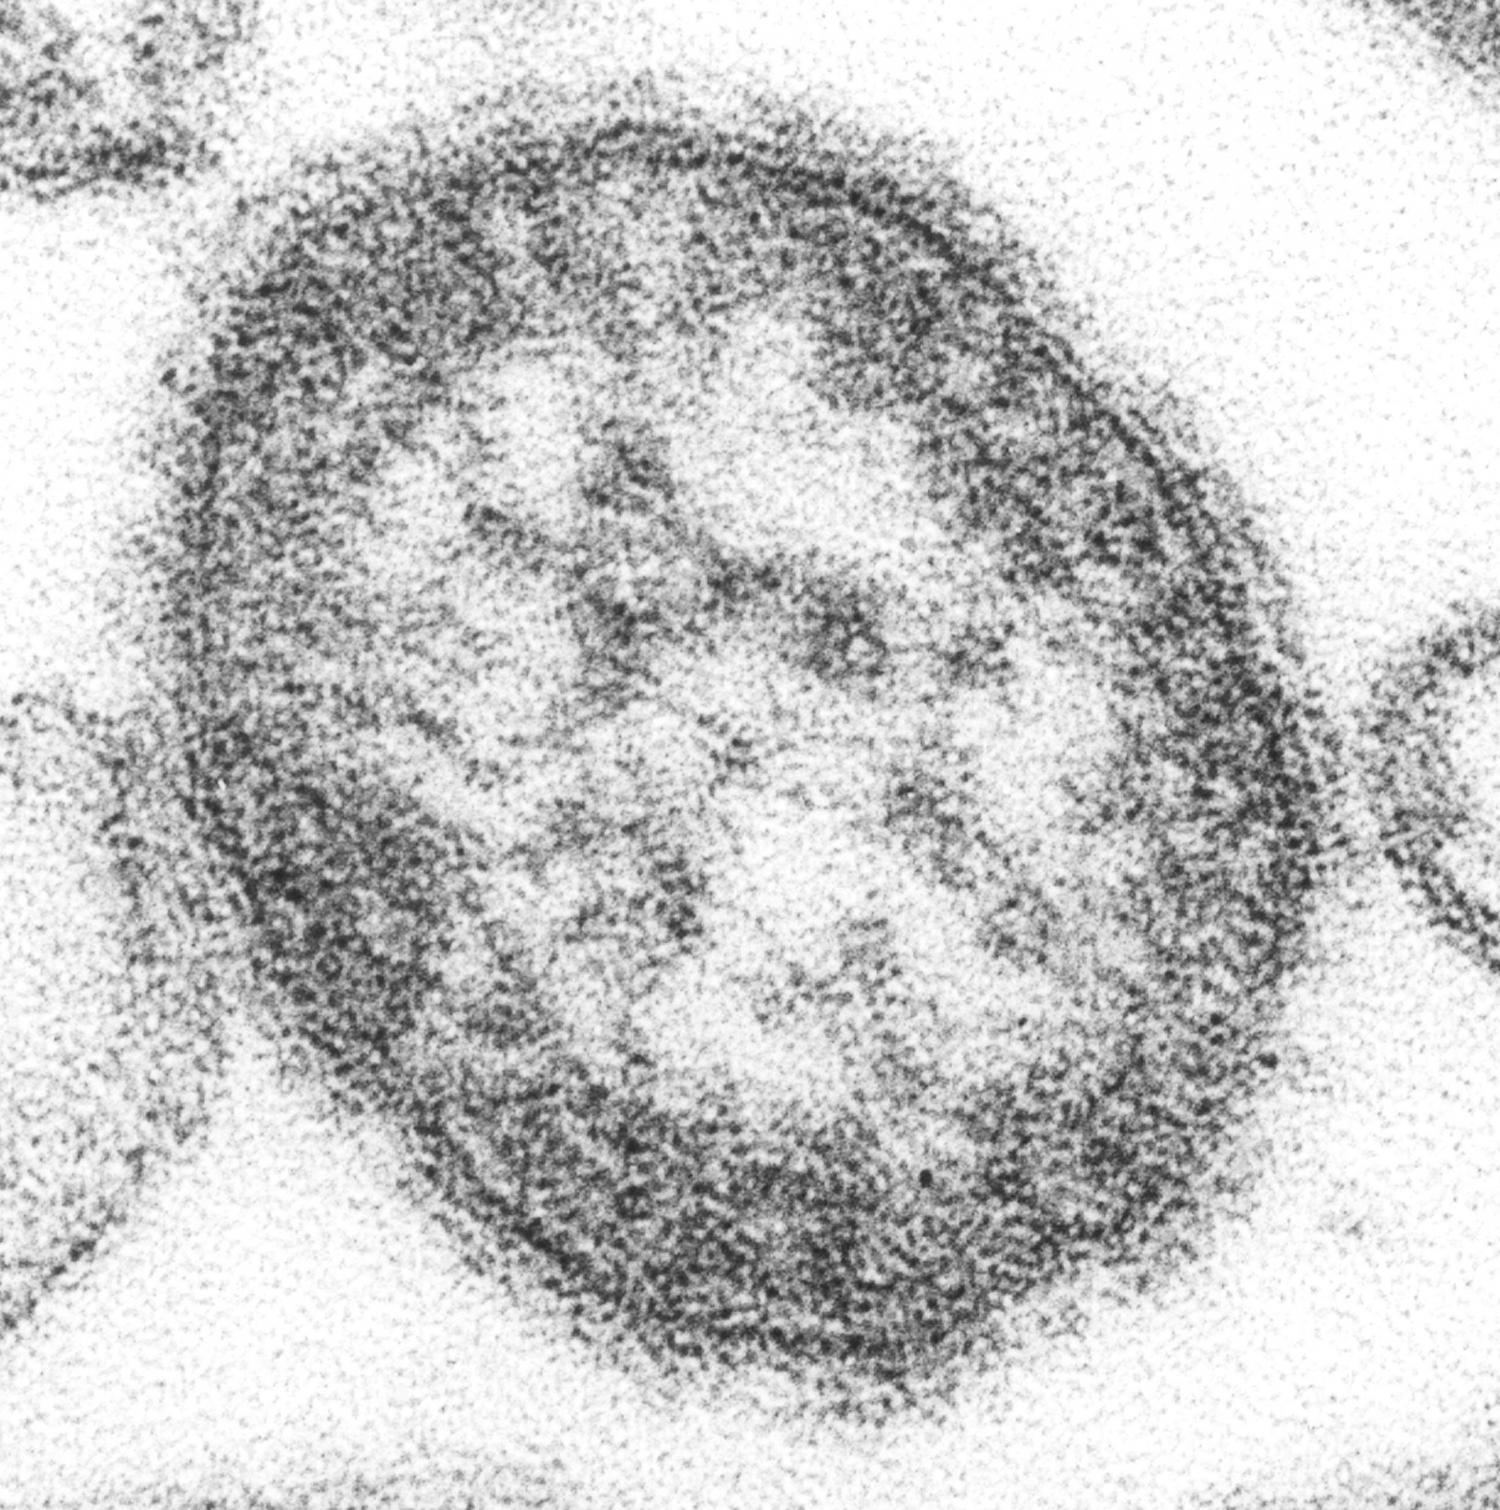 #experts fear Balkans measles outbreak